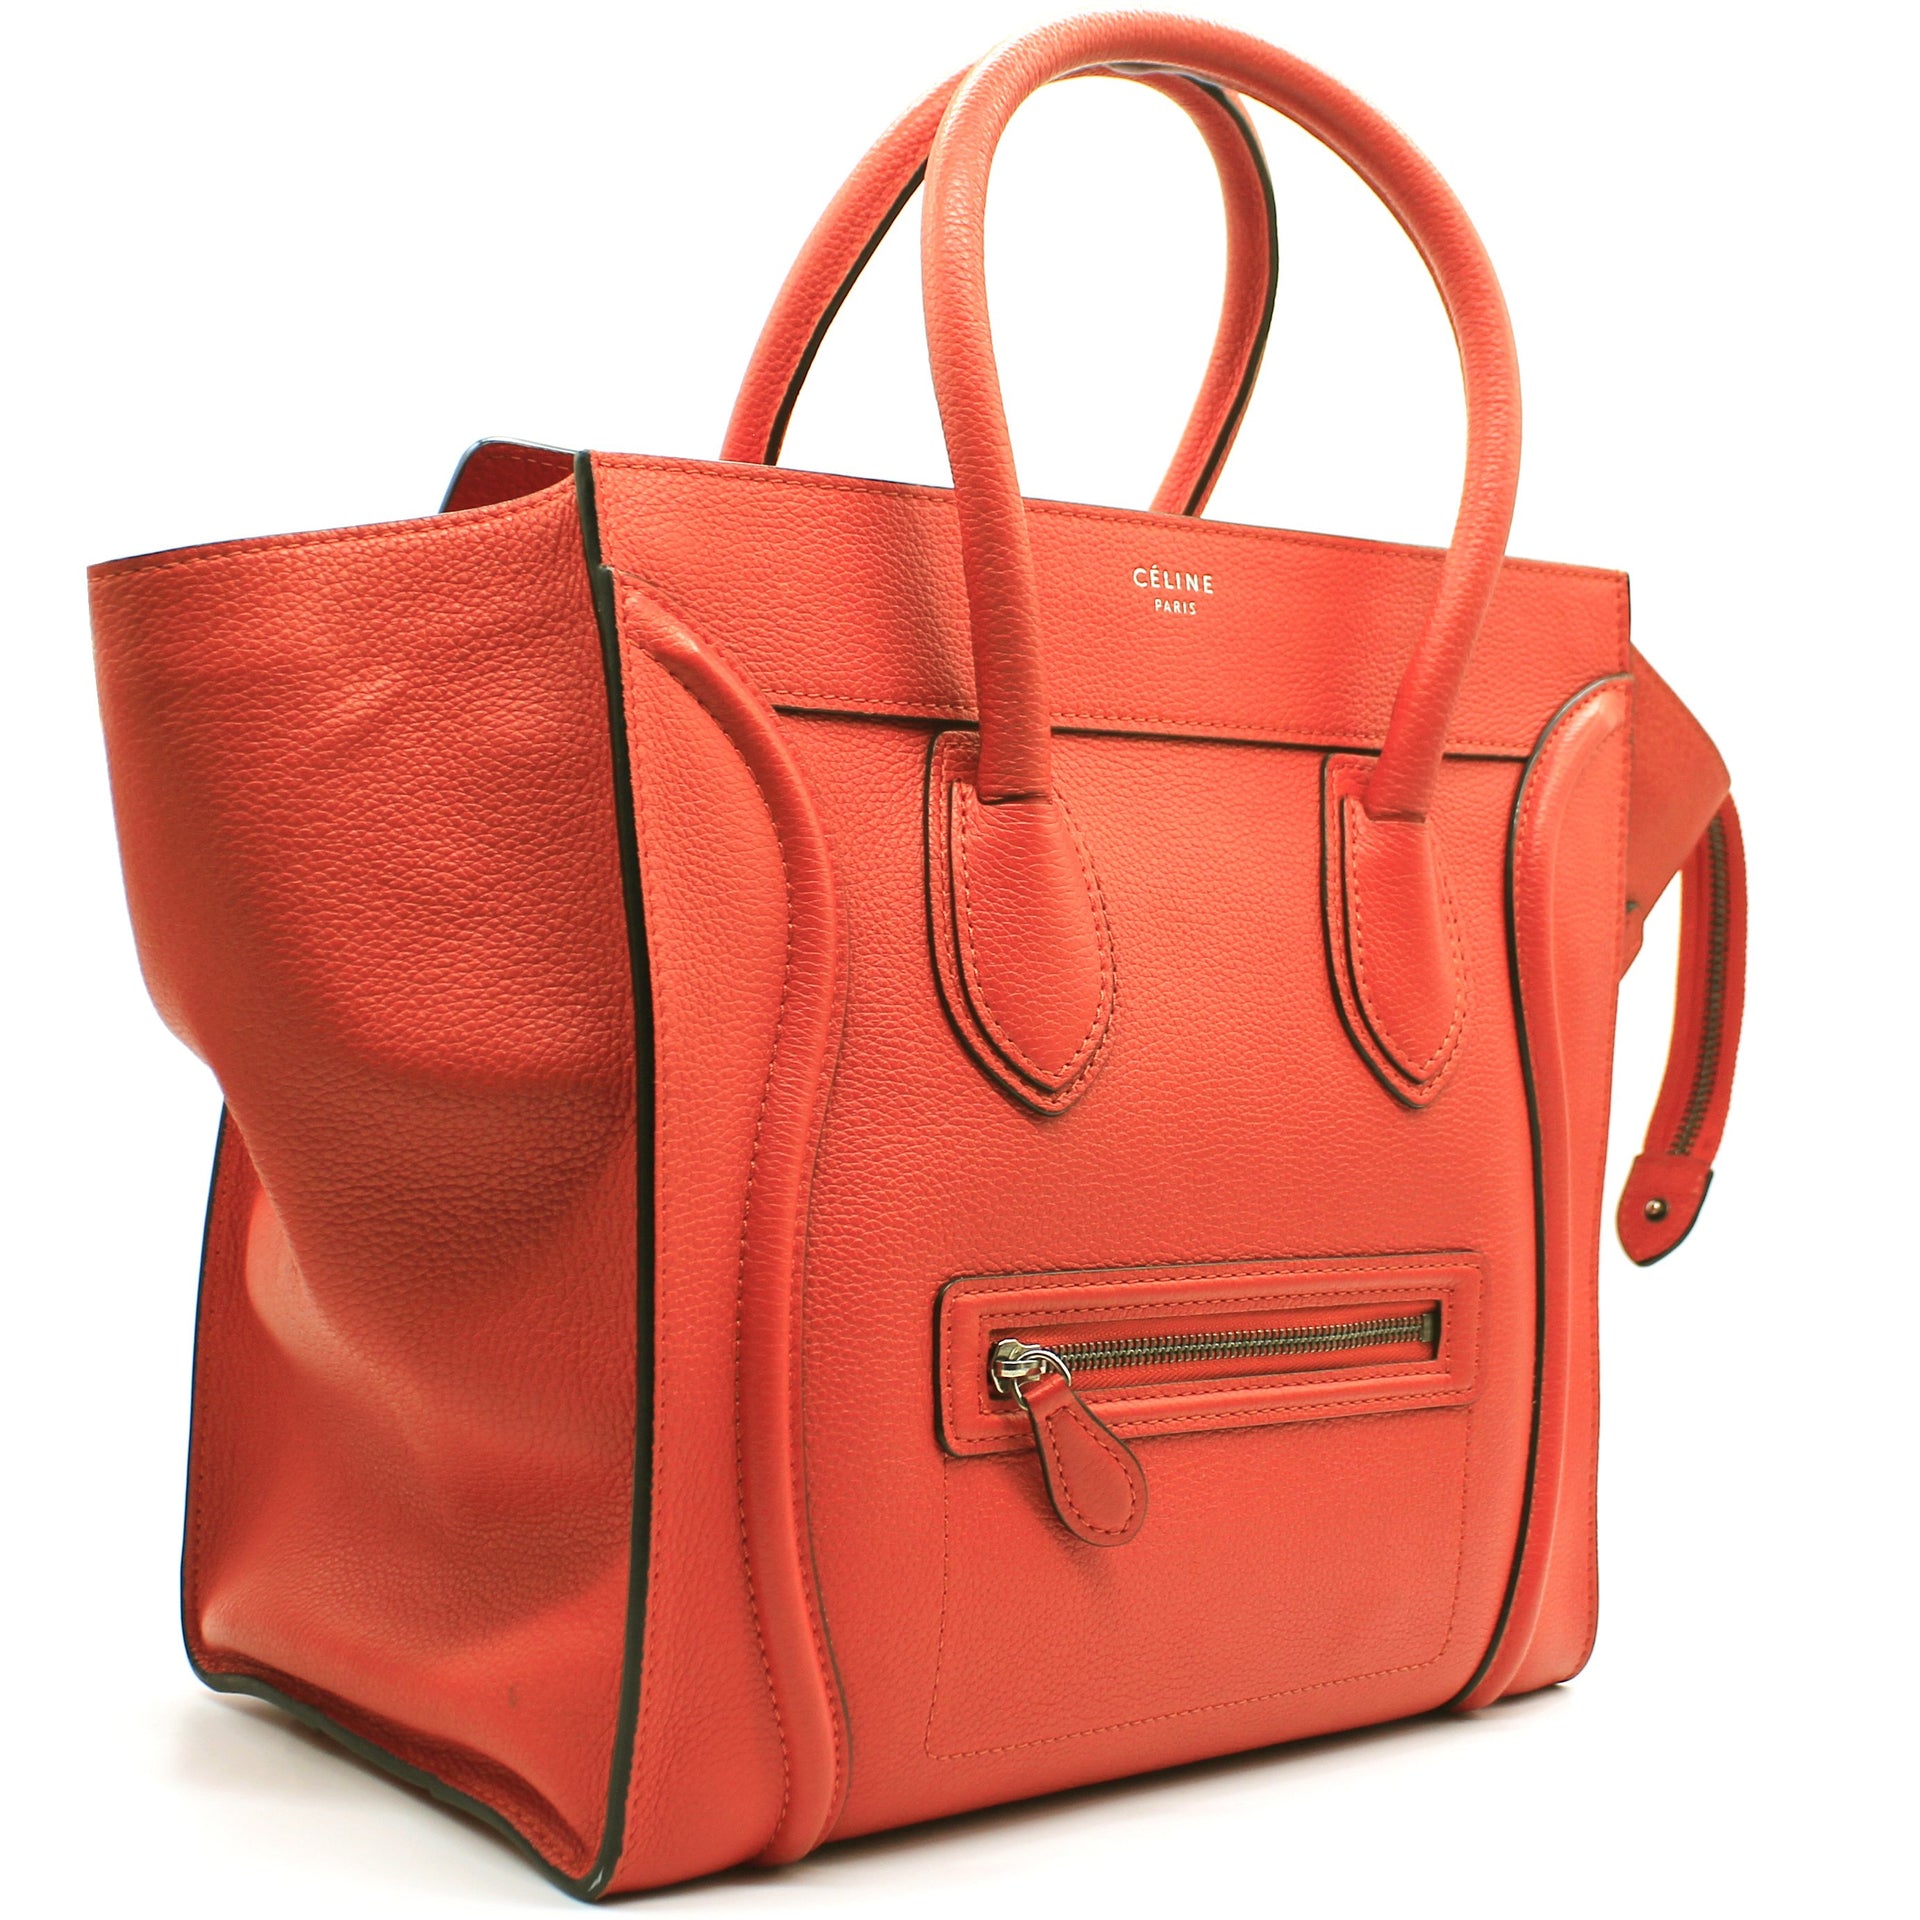 Celine Medium Luggage Phatom Bag in Calfskin